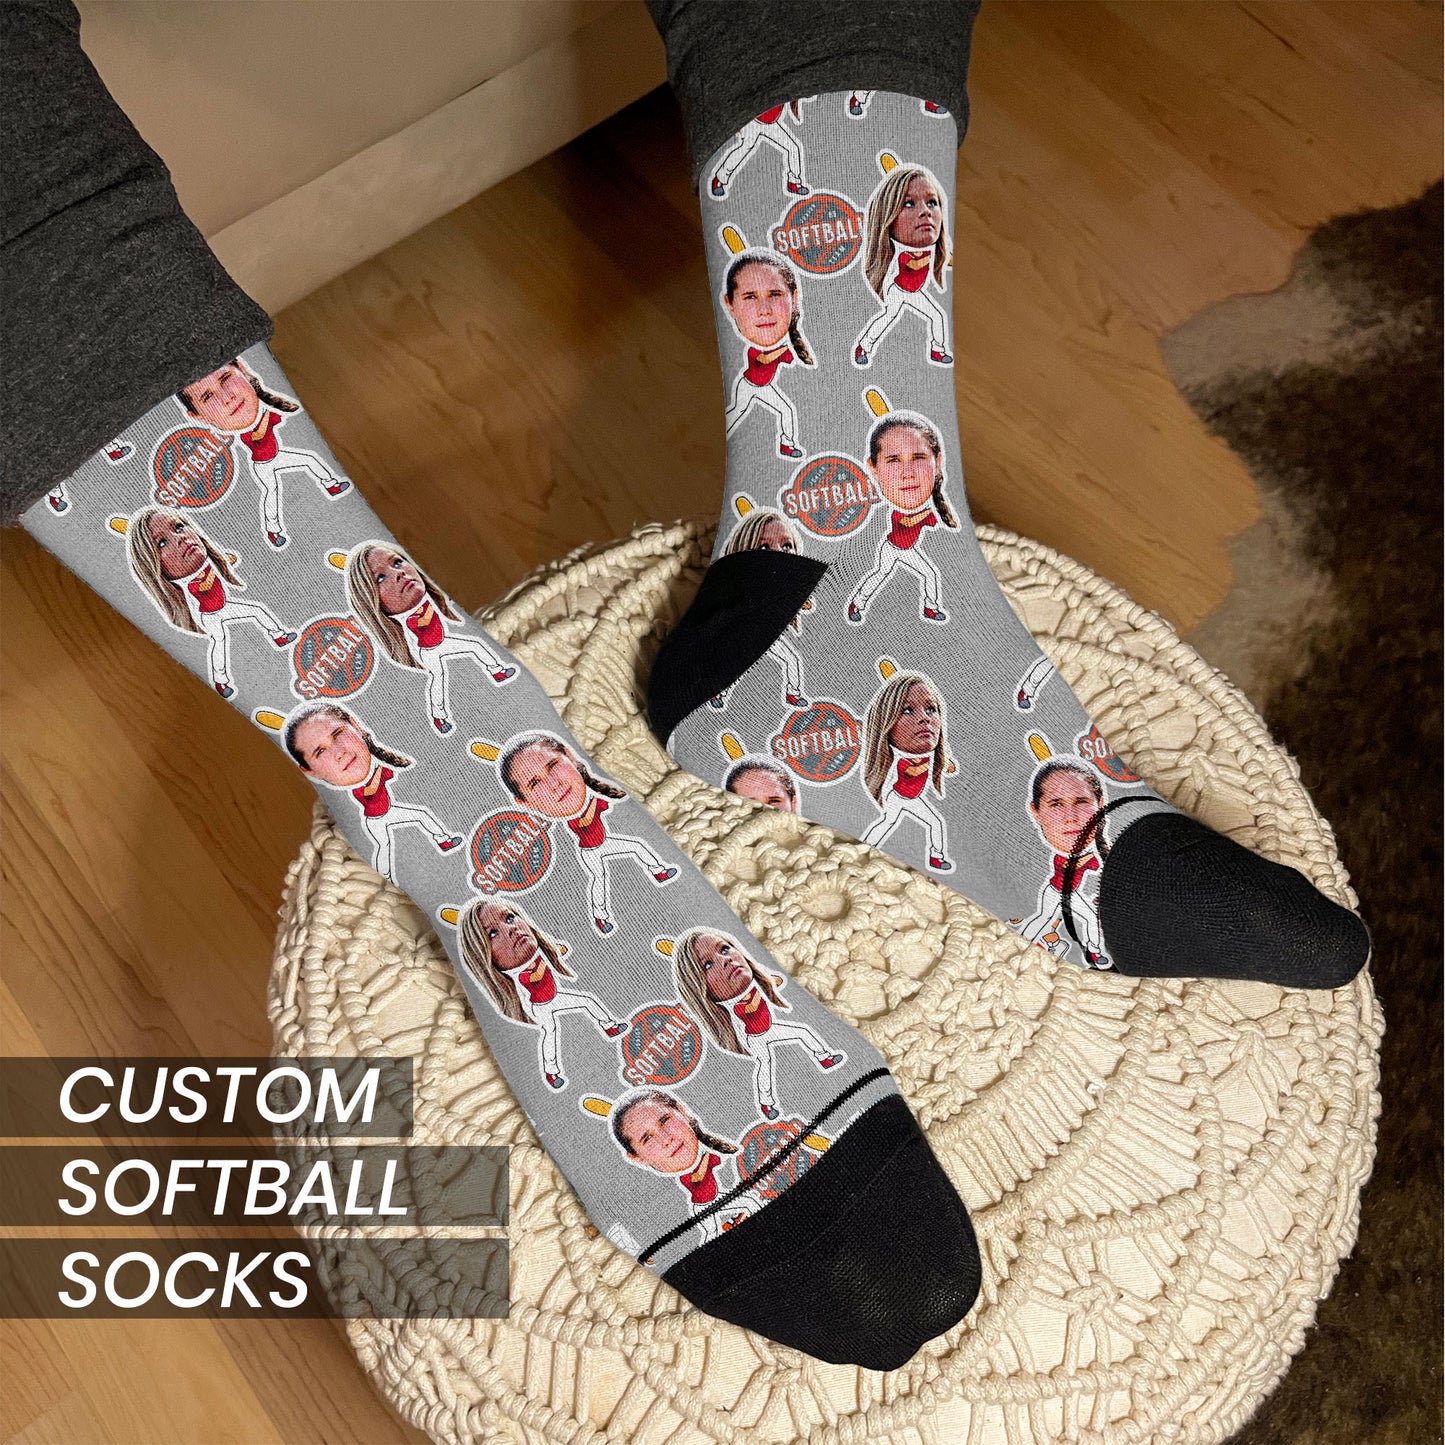 personalized softball socks with real photos on cartoon bodies on grey socks